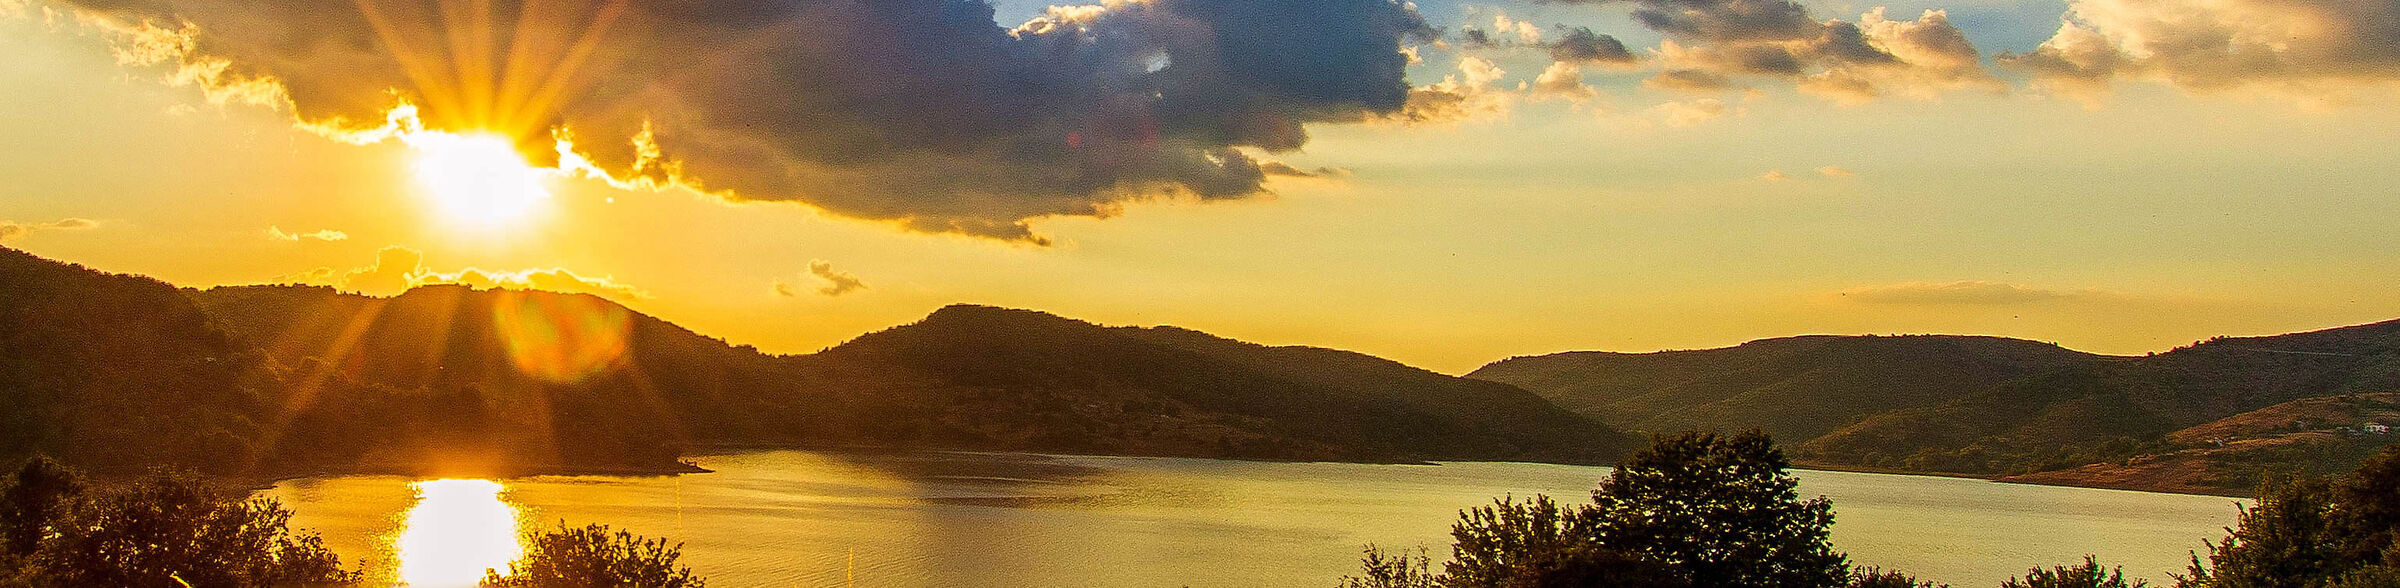 Sunset on Lake Campotosto (AQ)...